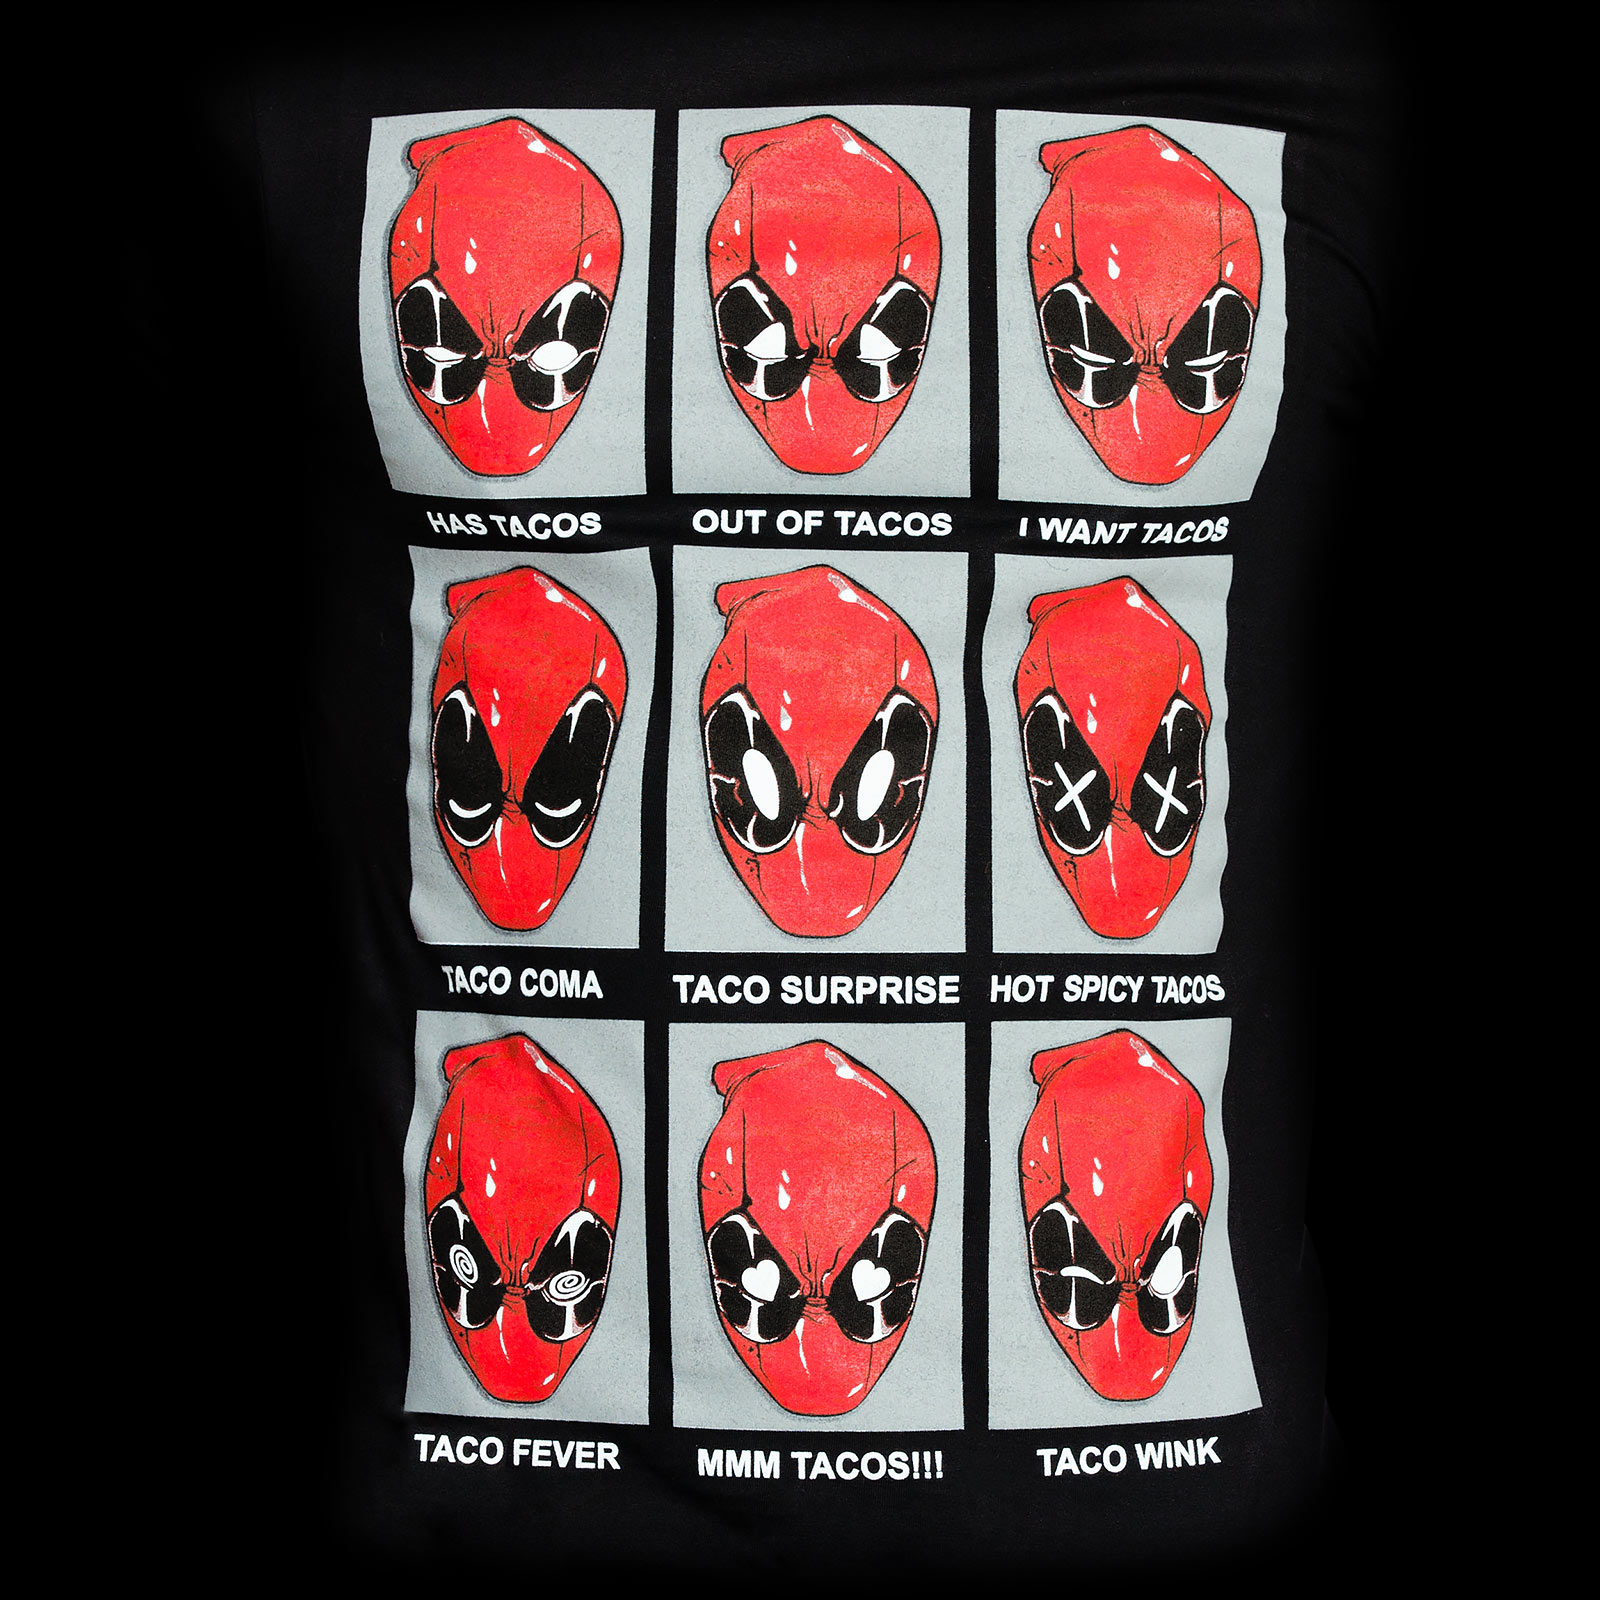 Deadpool - Emotions T-Shirt schwarz